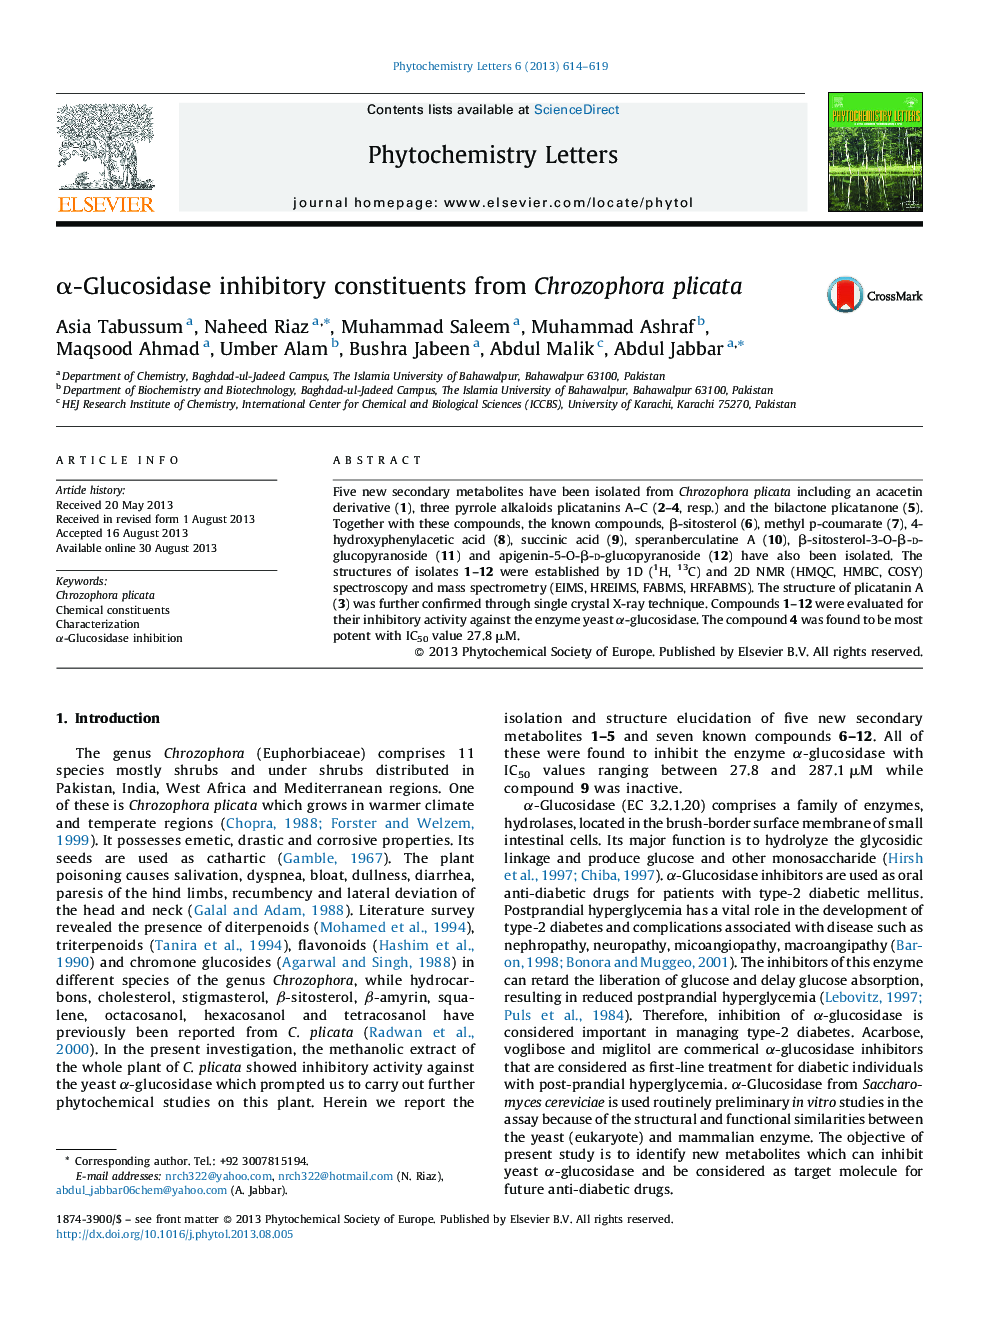 Î±-Glucosidase inhibitory constituents from Chrozophora plicata